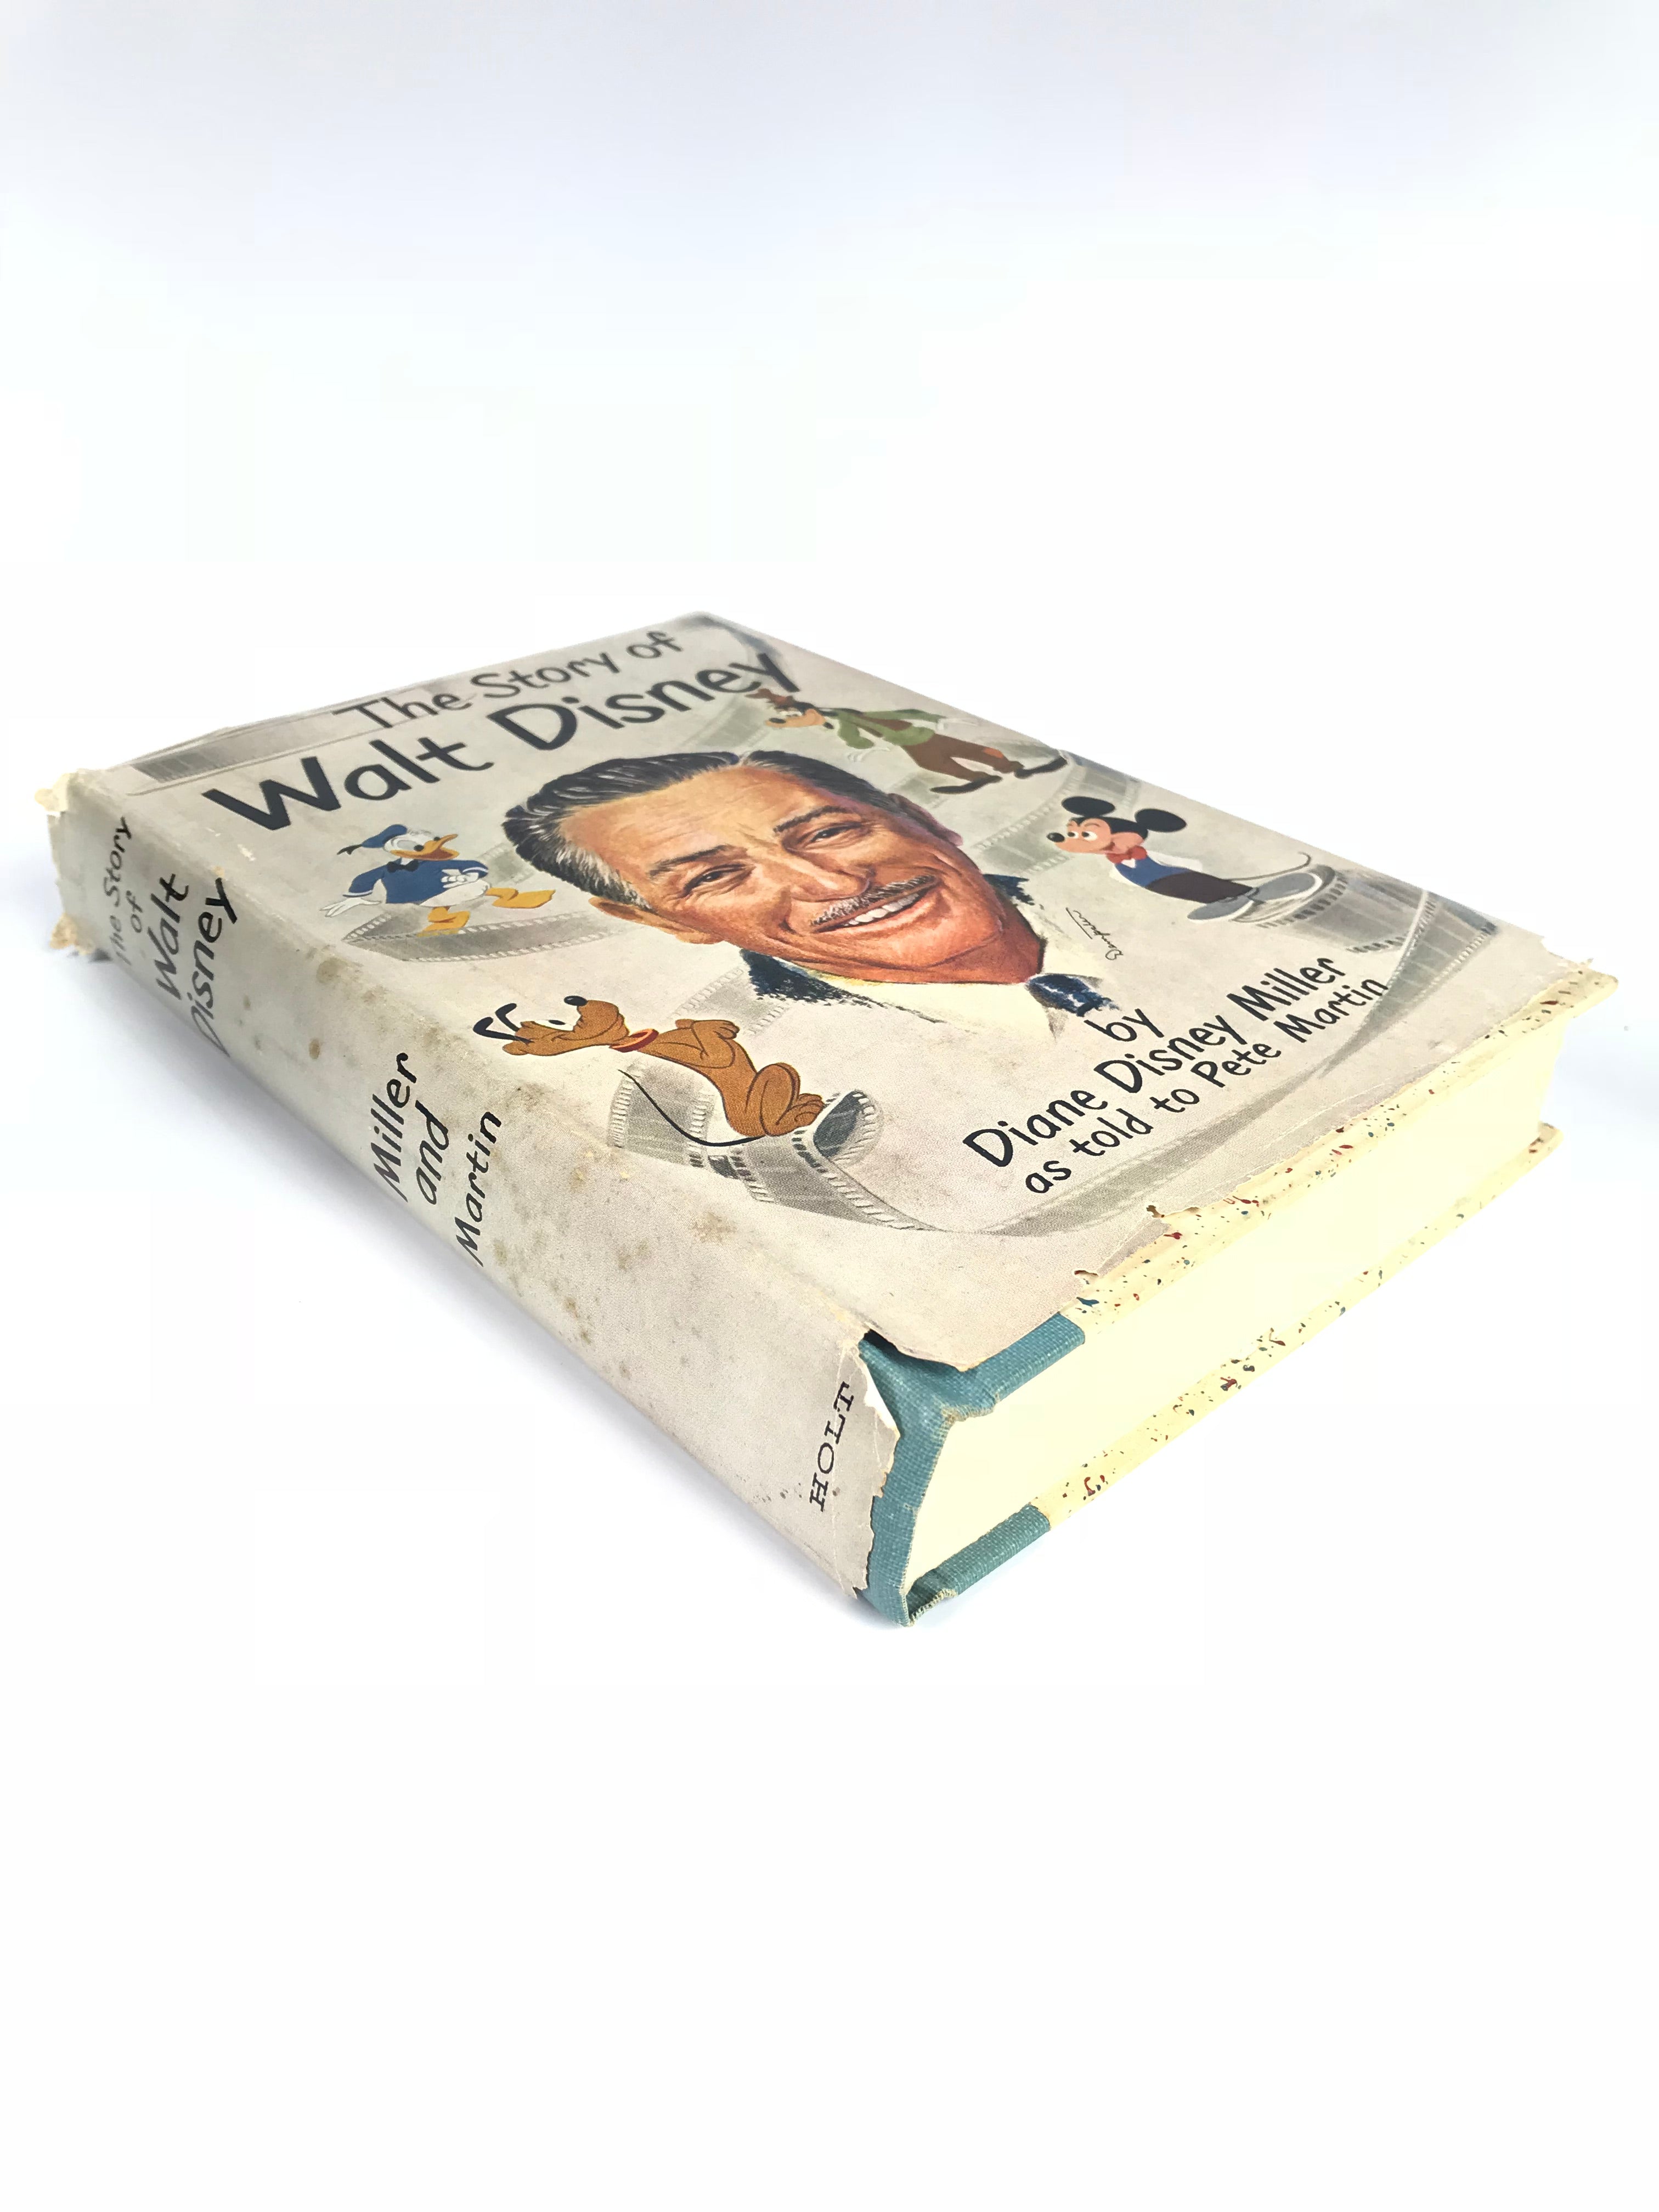 Walt Disney Signed 1956 First Edition Biography